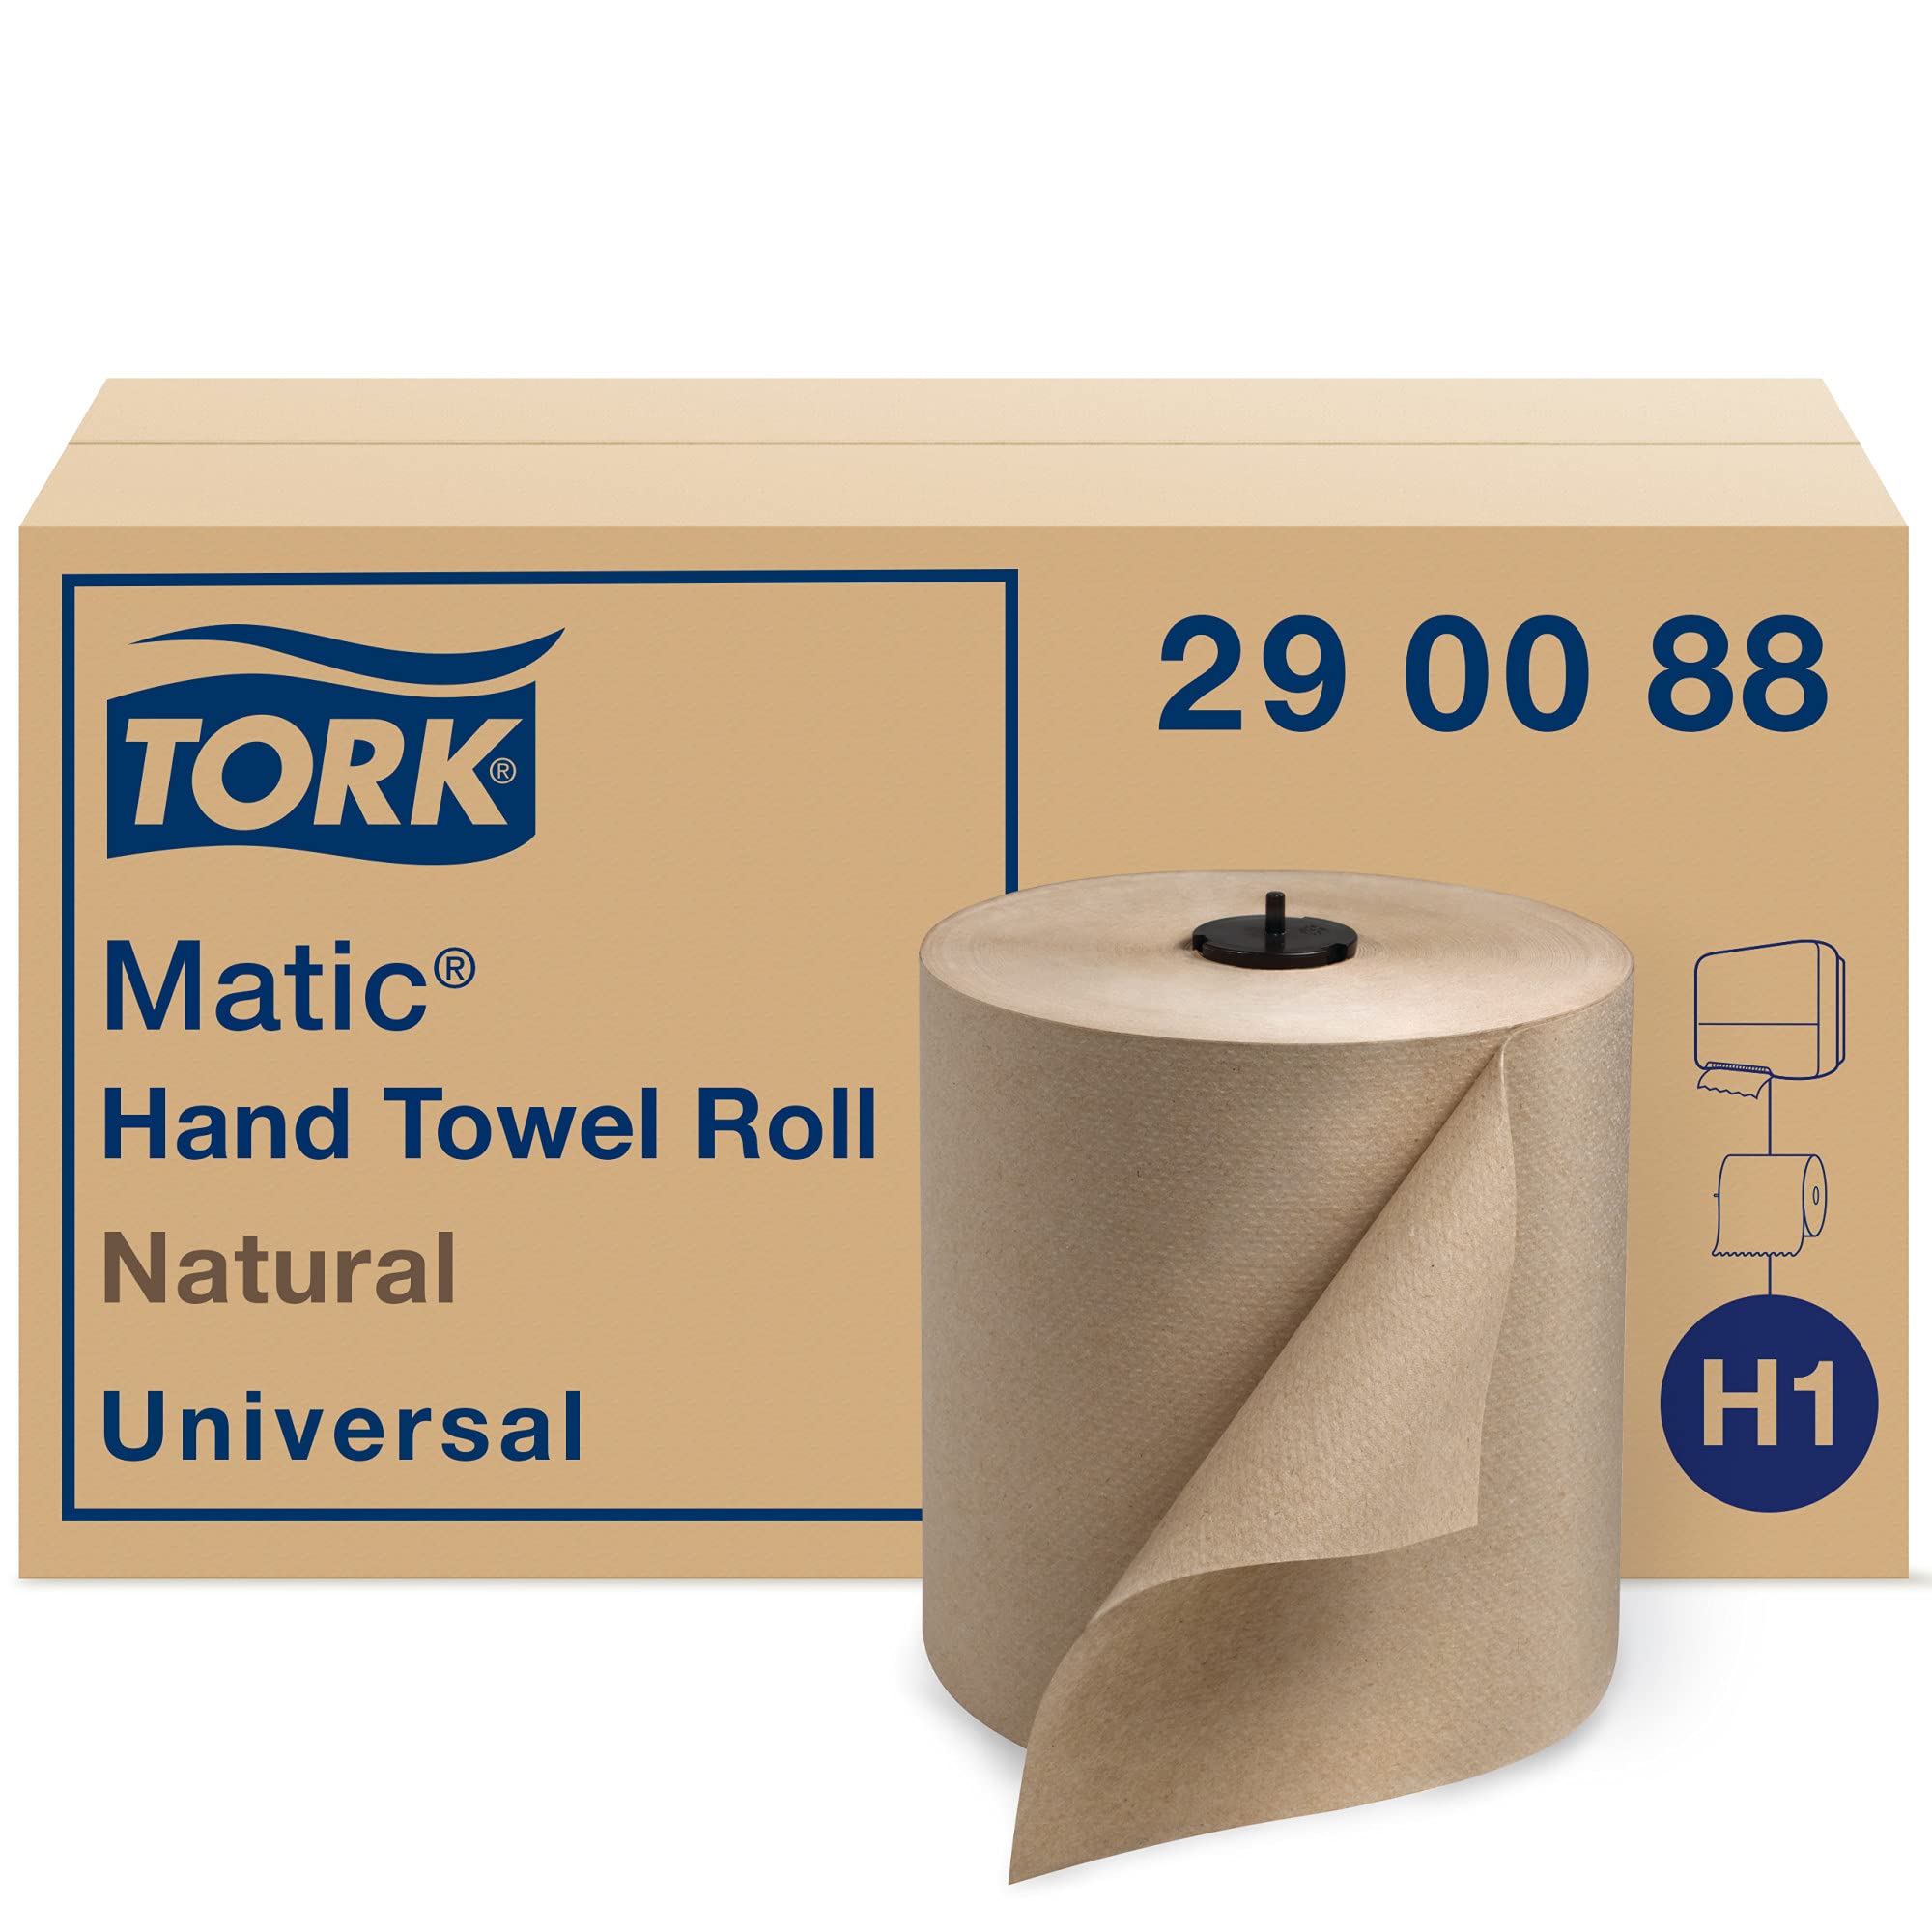 Tork Matic 高级纸巾卷 H1，擦手纸 290089，100% 再生纤维，高吸收性，高容量 1 层，白色 - 6 卷 x 700 英尺